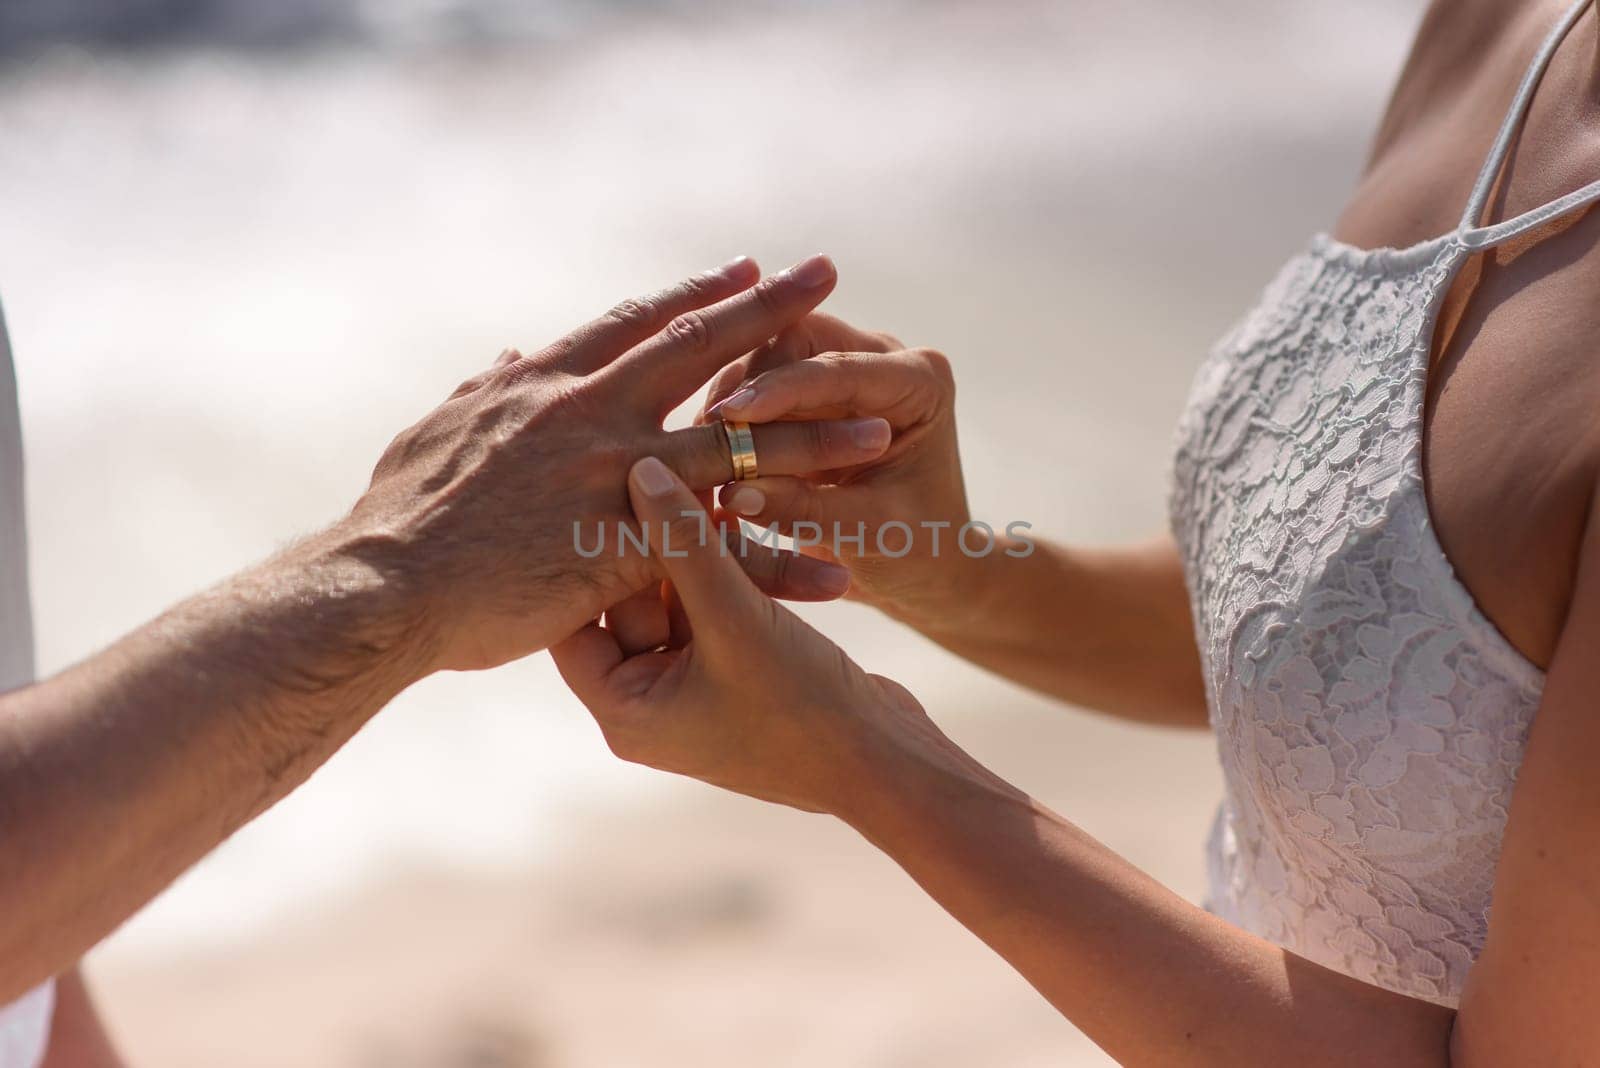 Newlyweds exchange rings, groom puts the ring on bride's hand